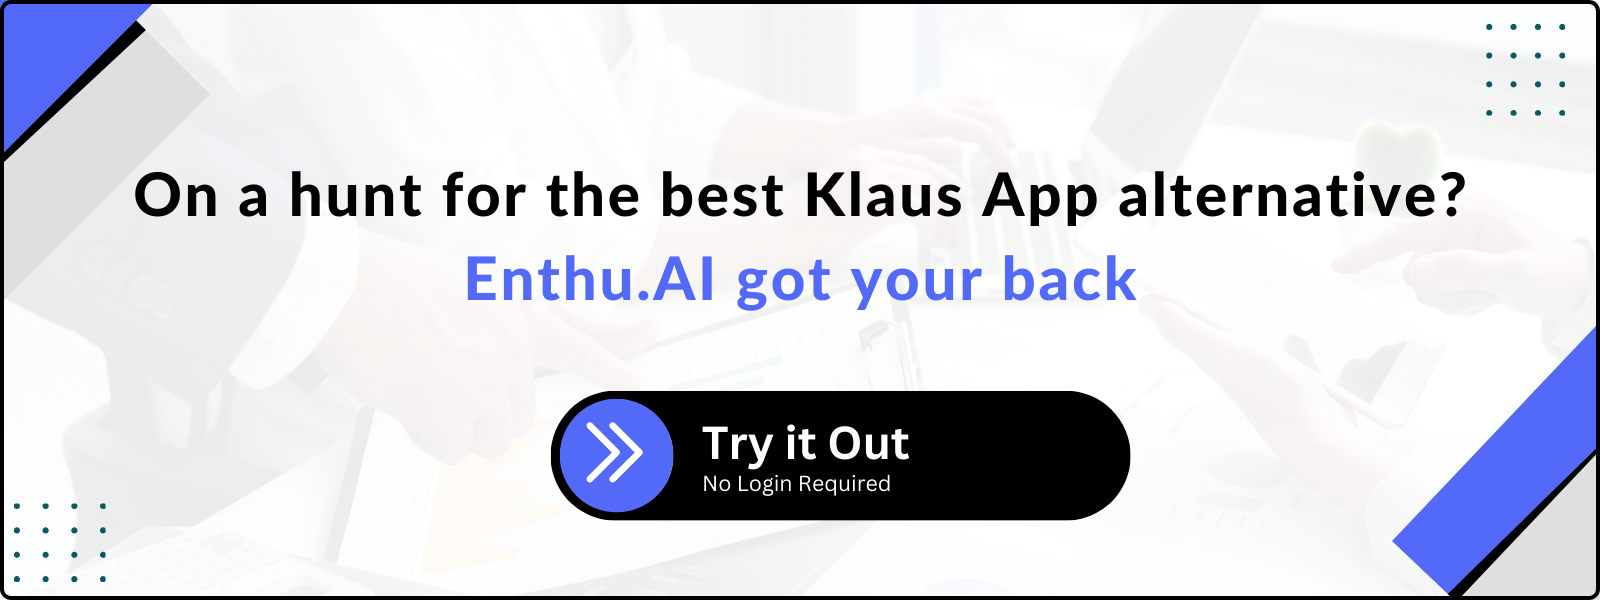 Klaus App alternative